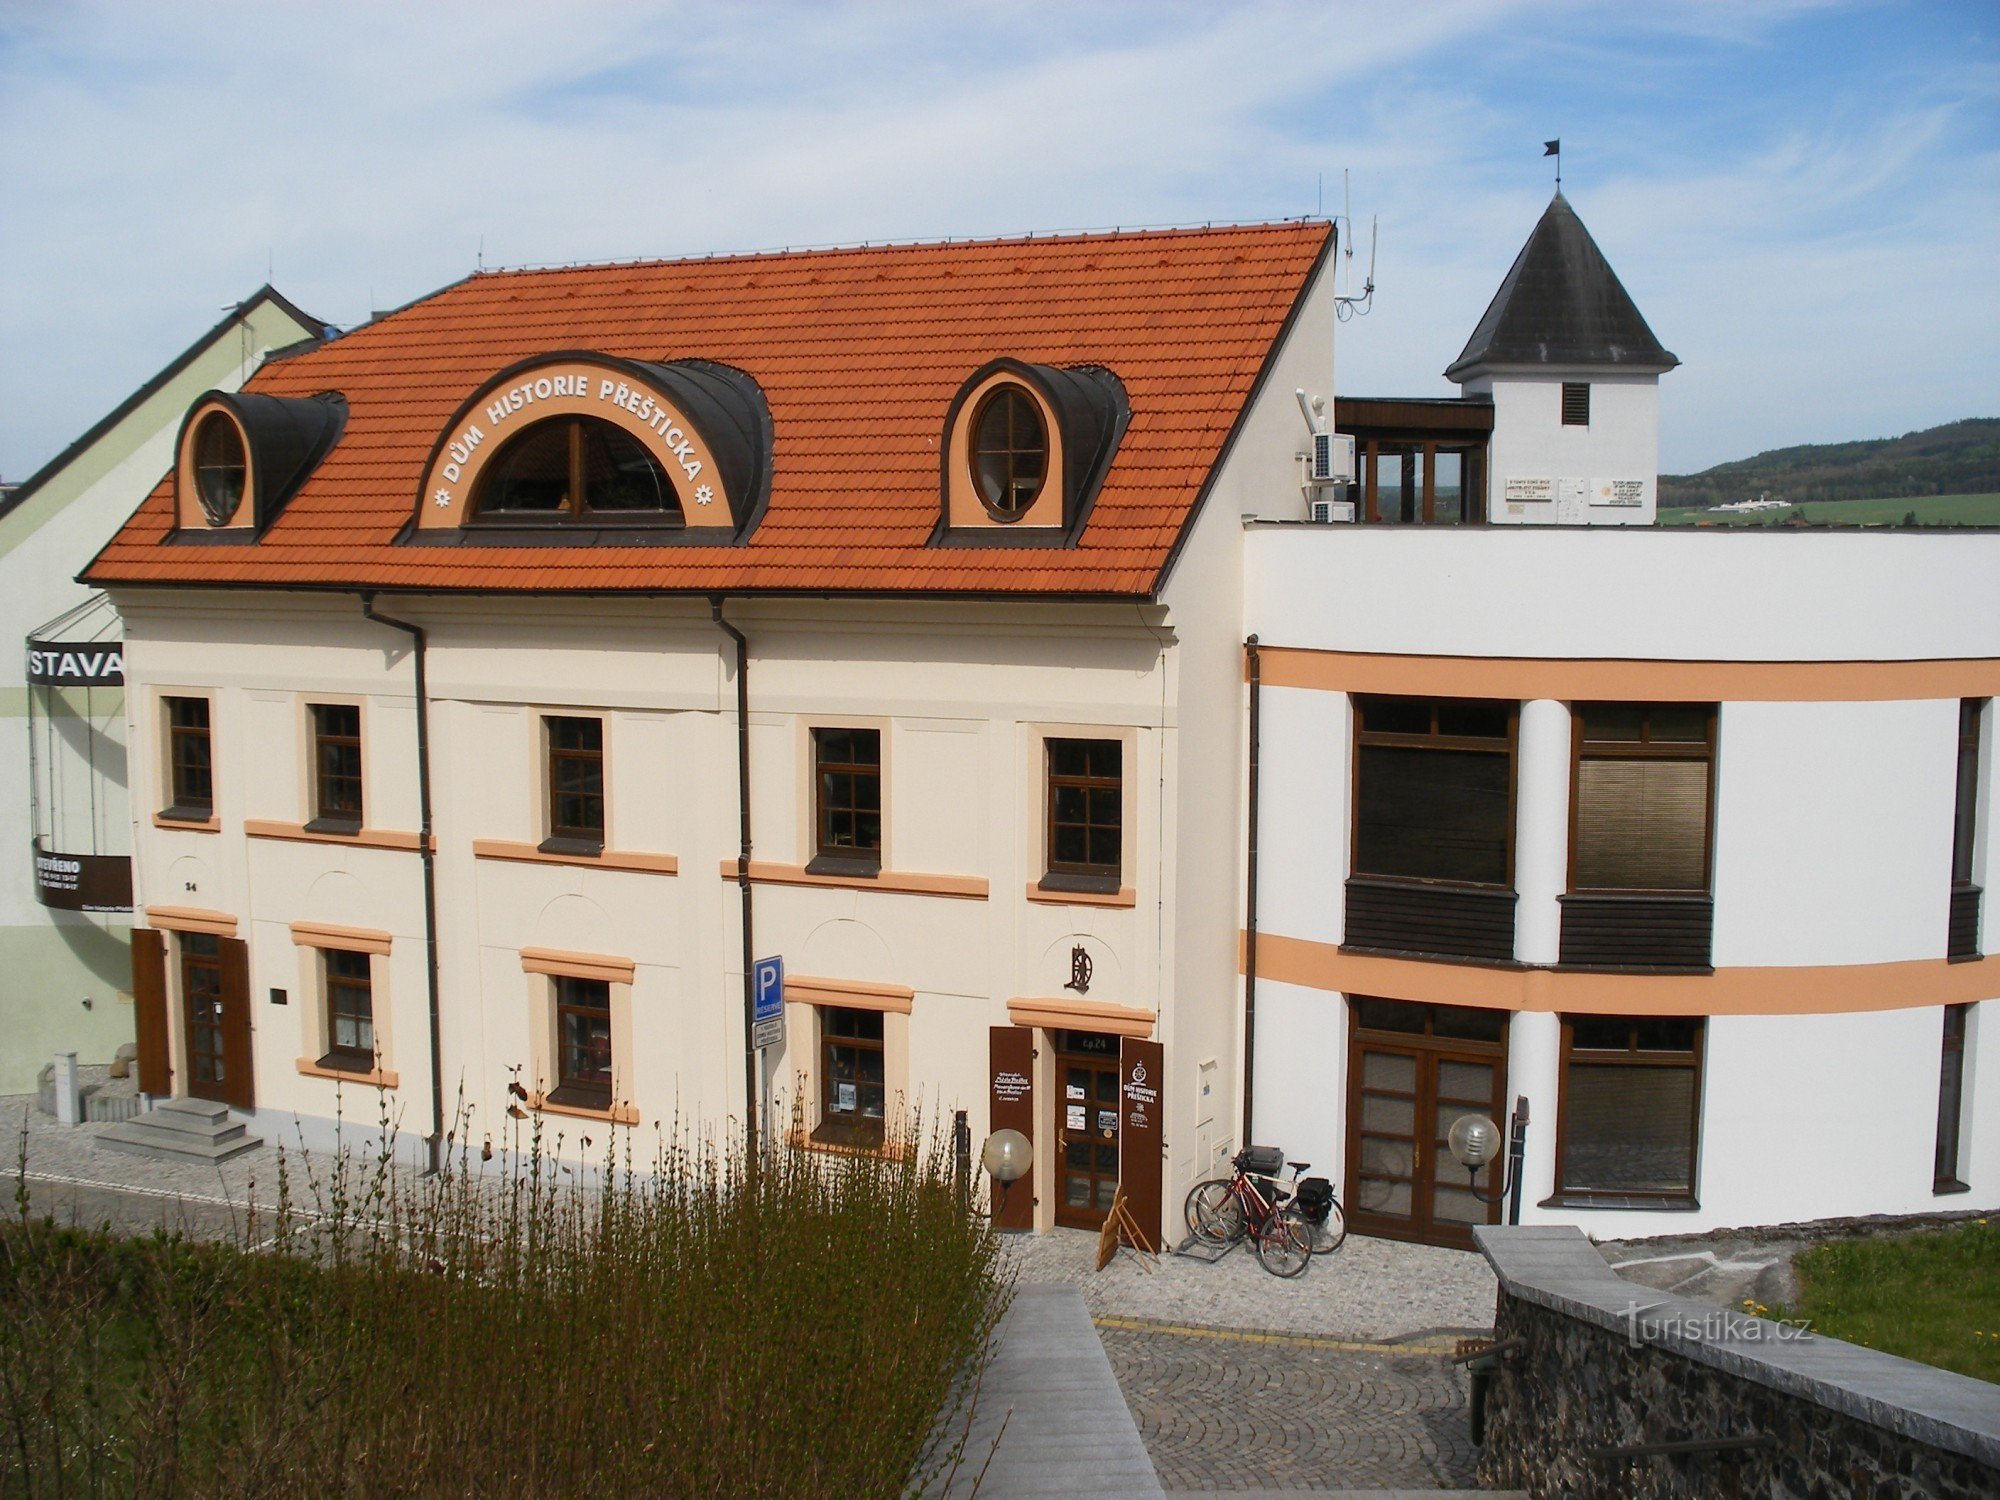 Przeštick House of History (DHP)